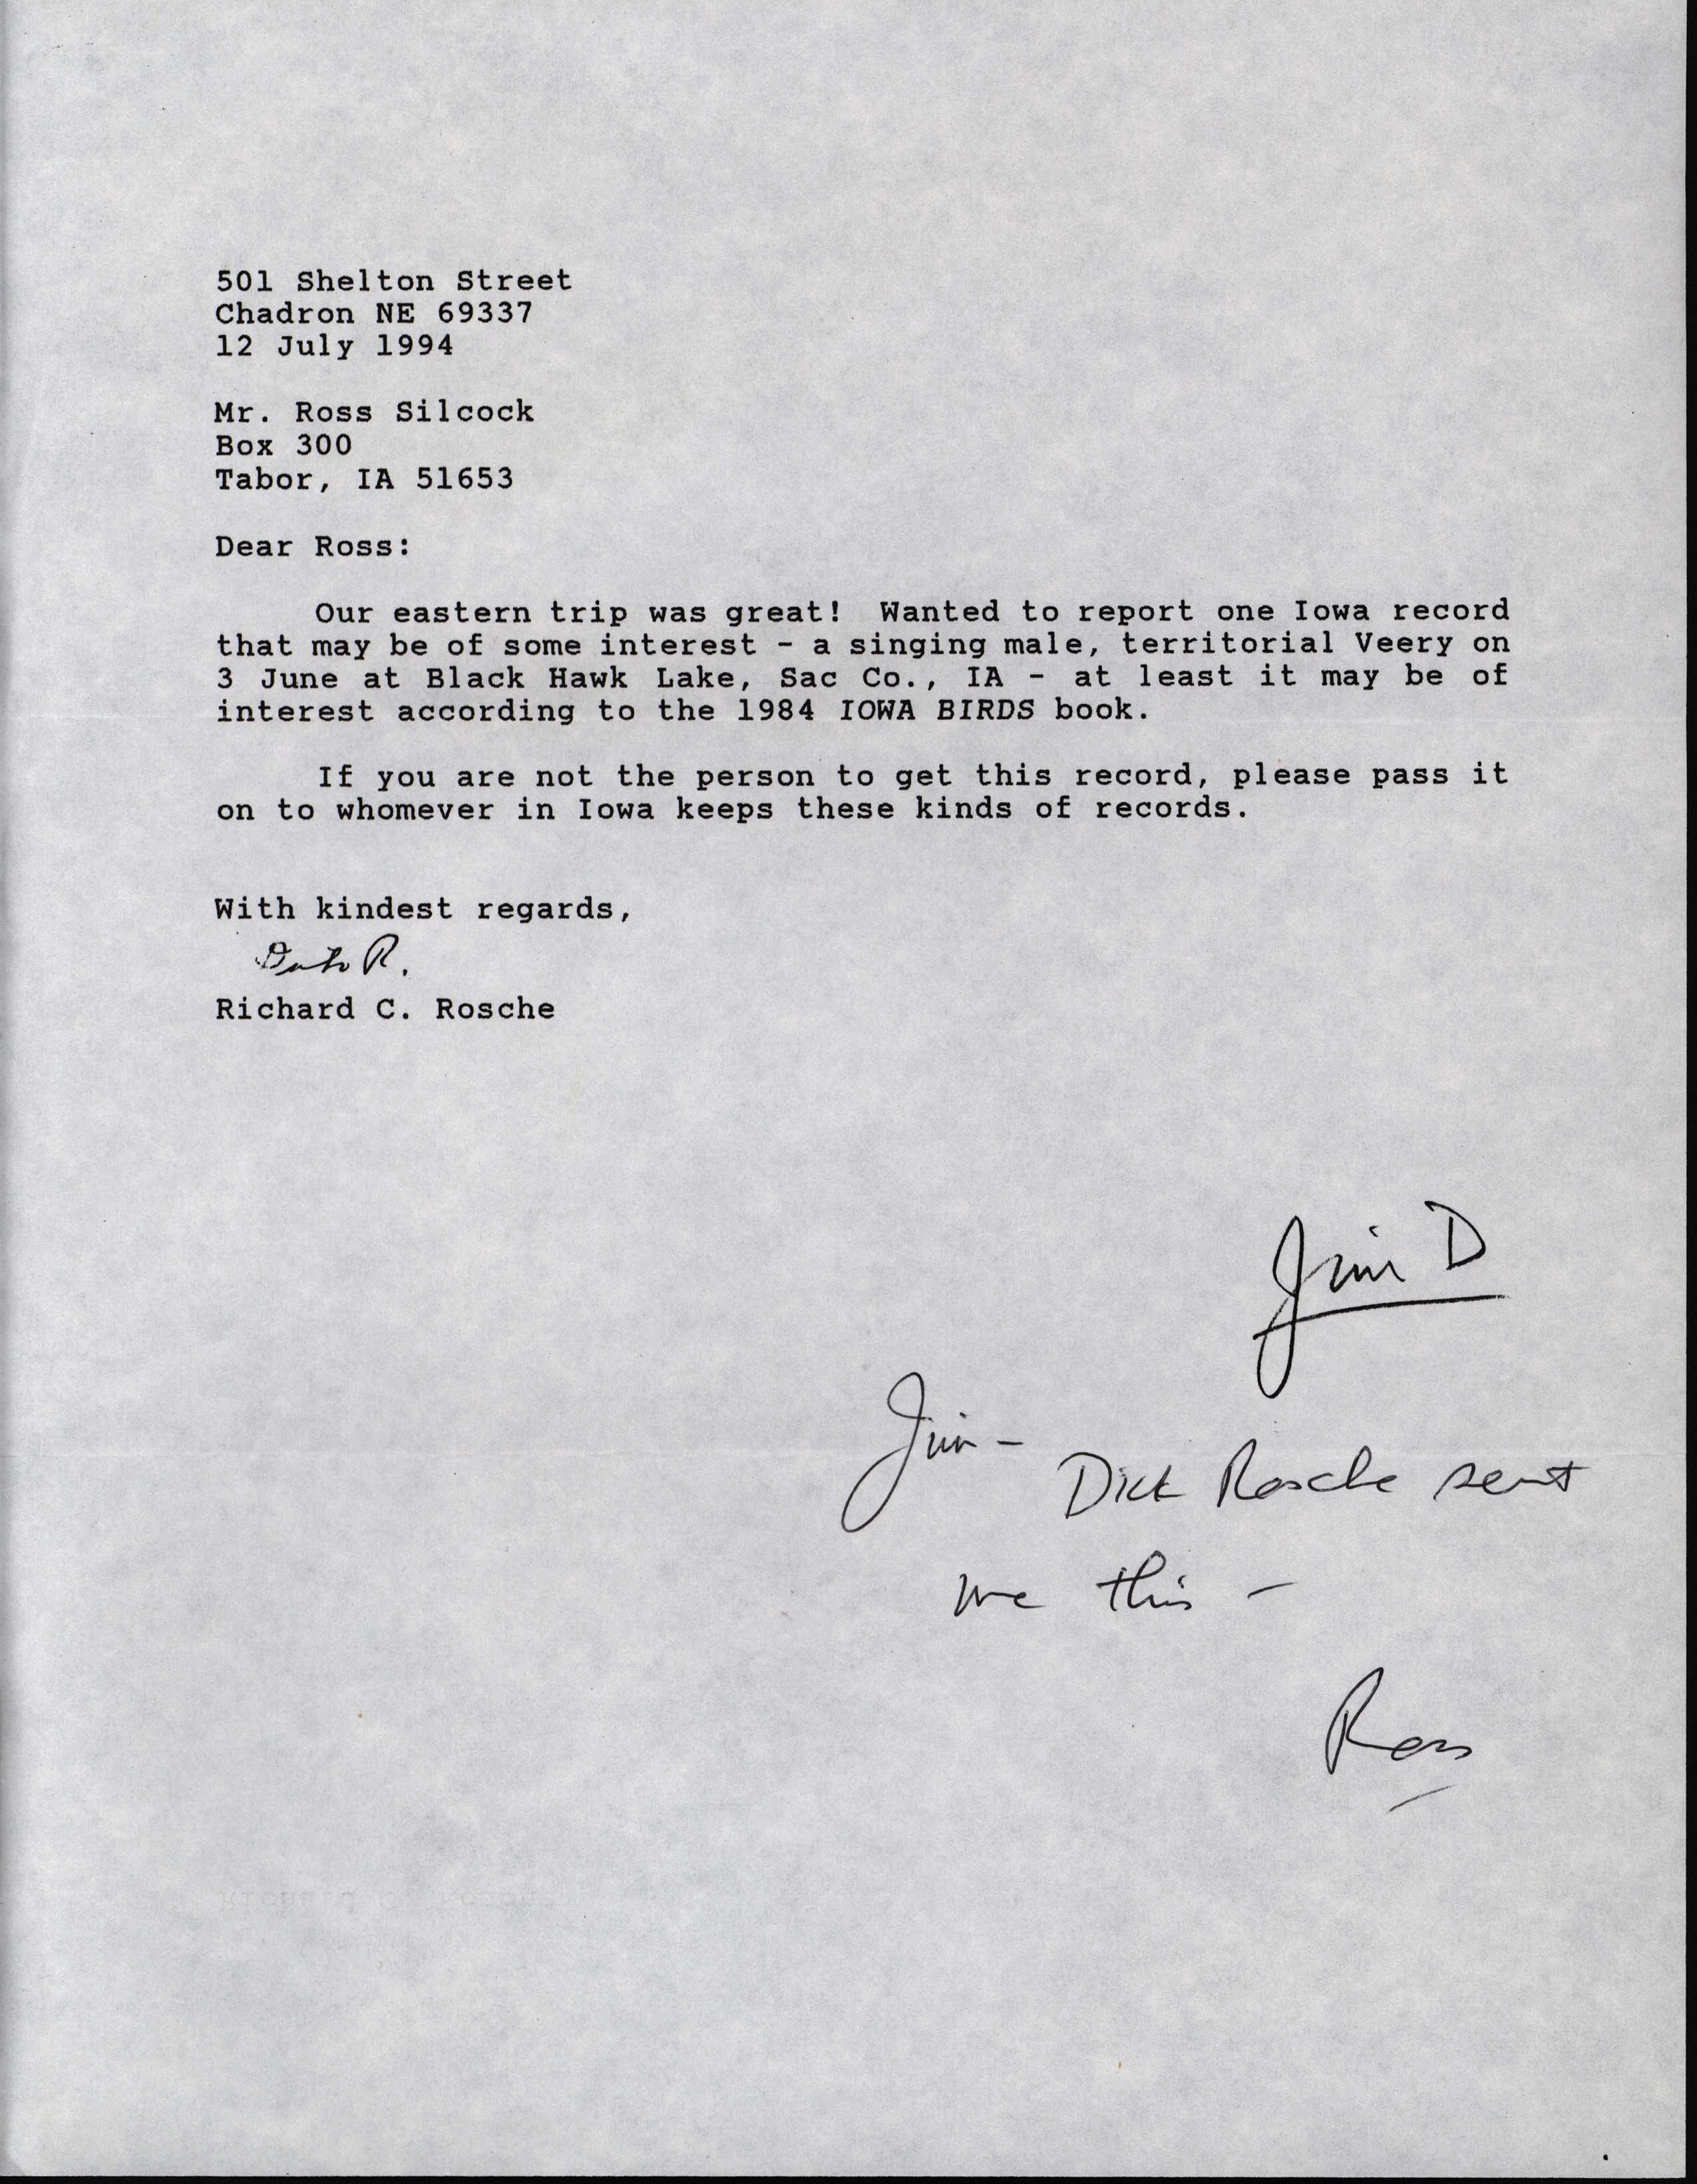 Richard Rosche letter to Ross Silcock regarding Veery sighting, July 12, 1994